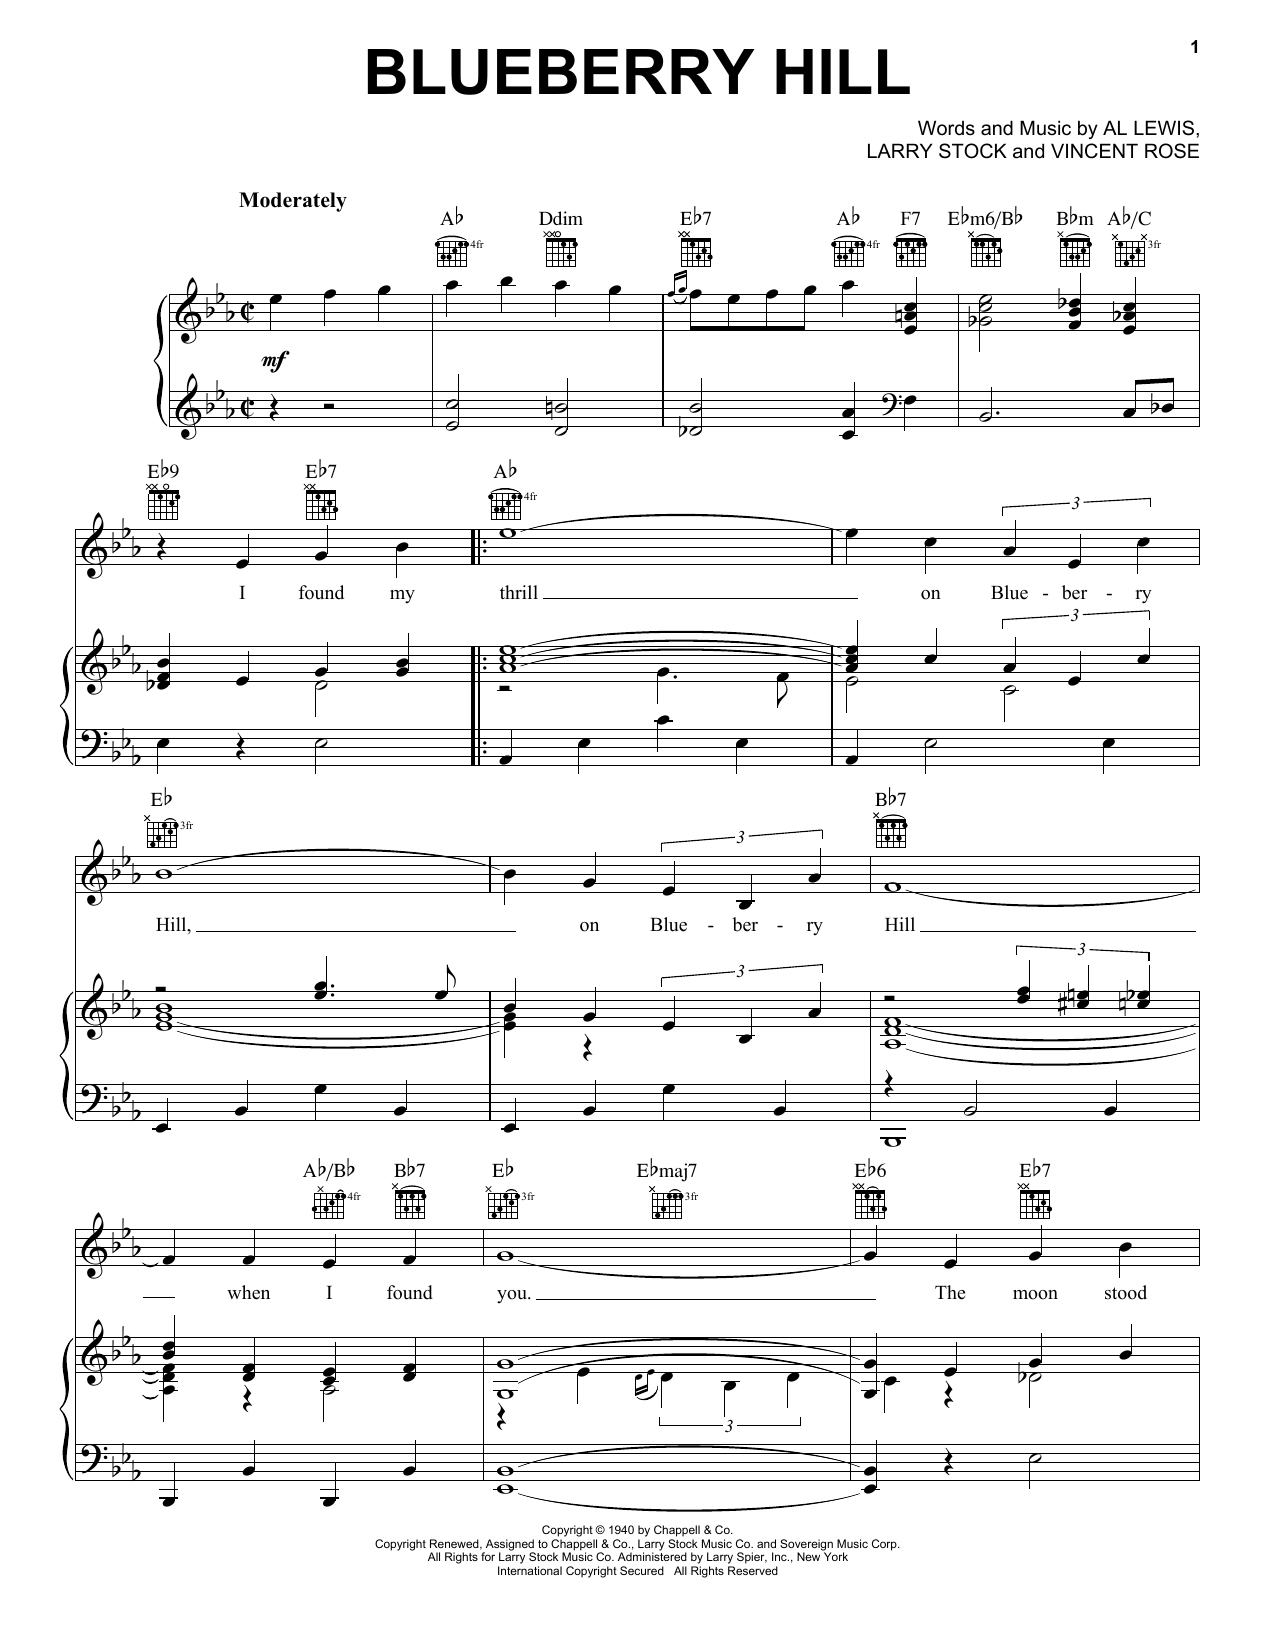 Fats "Blueberry Hill" Sheet Music PDF Notes, Chords | Rock Score Ukulele Download Printable. SKU: 151465